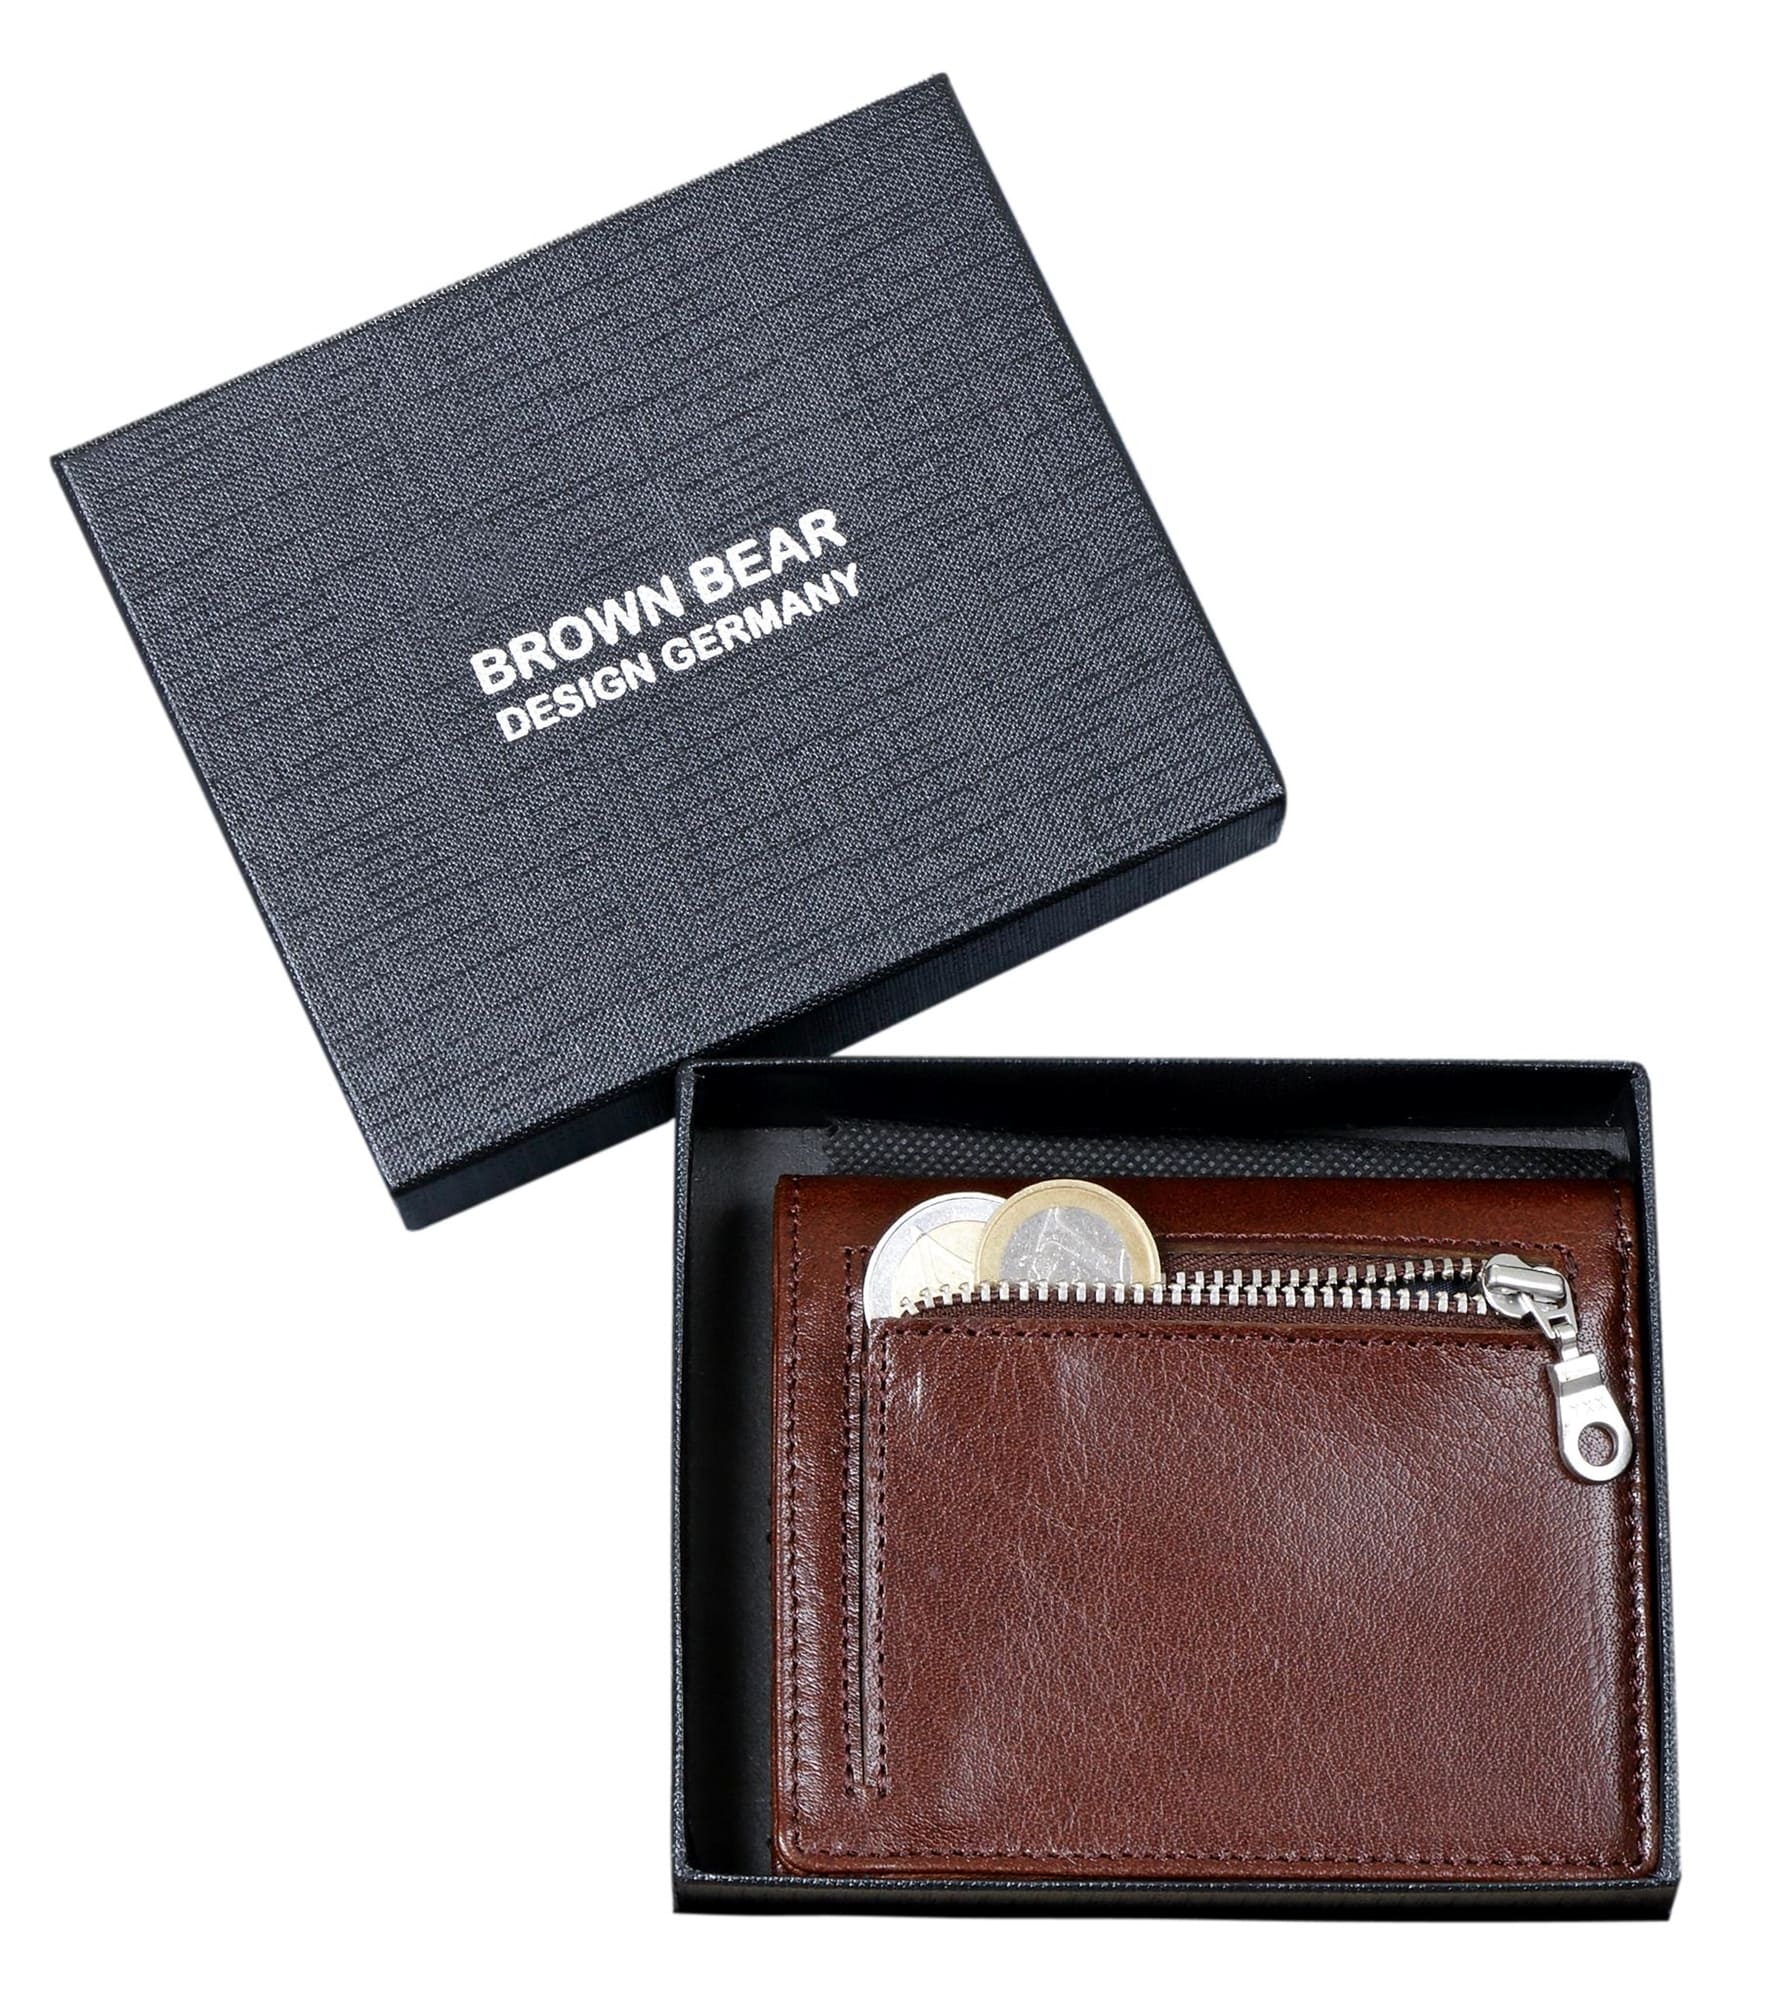 Brown Bear Slim Wallet - 8005 Braun Toscana